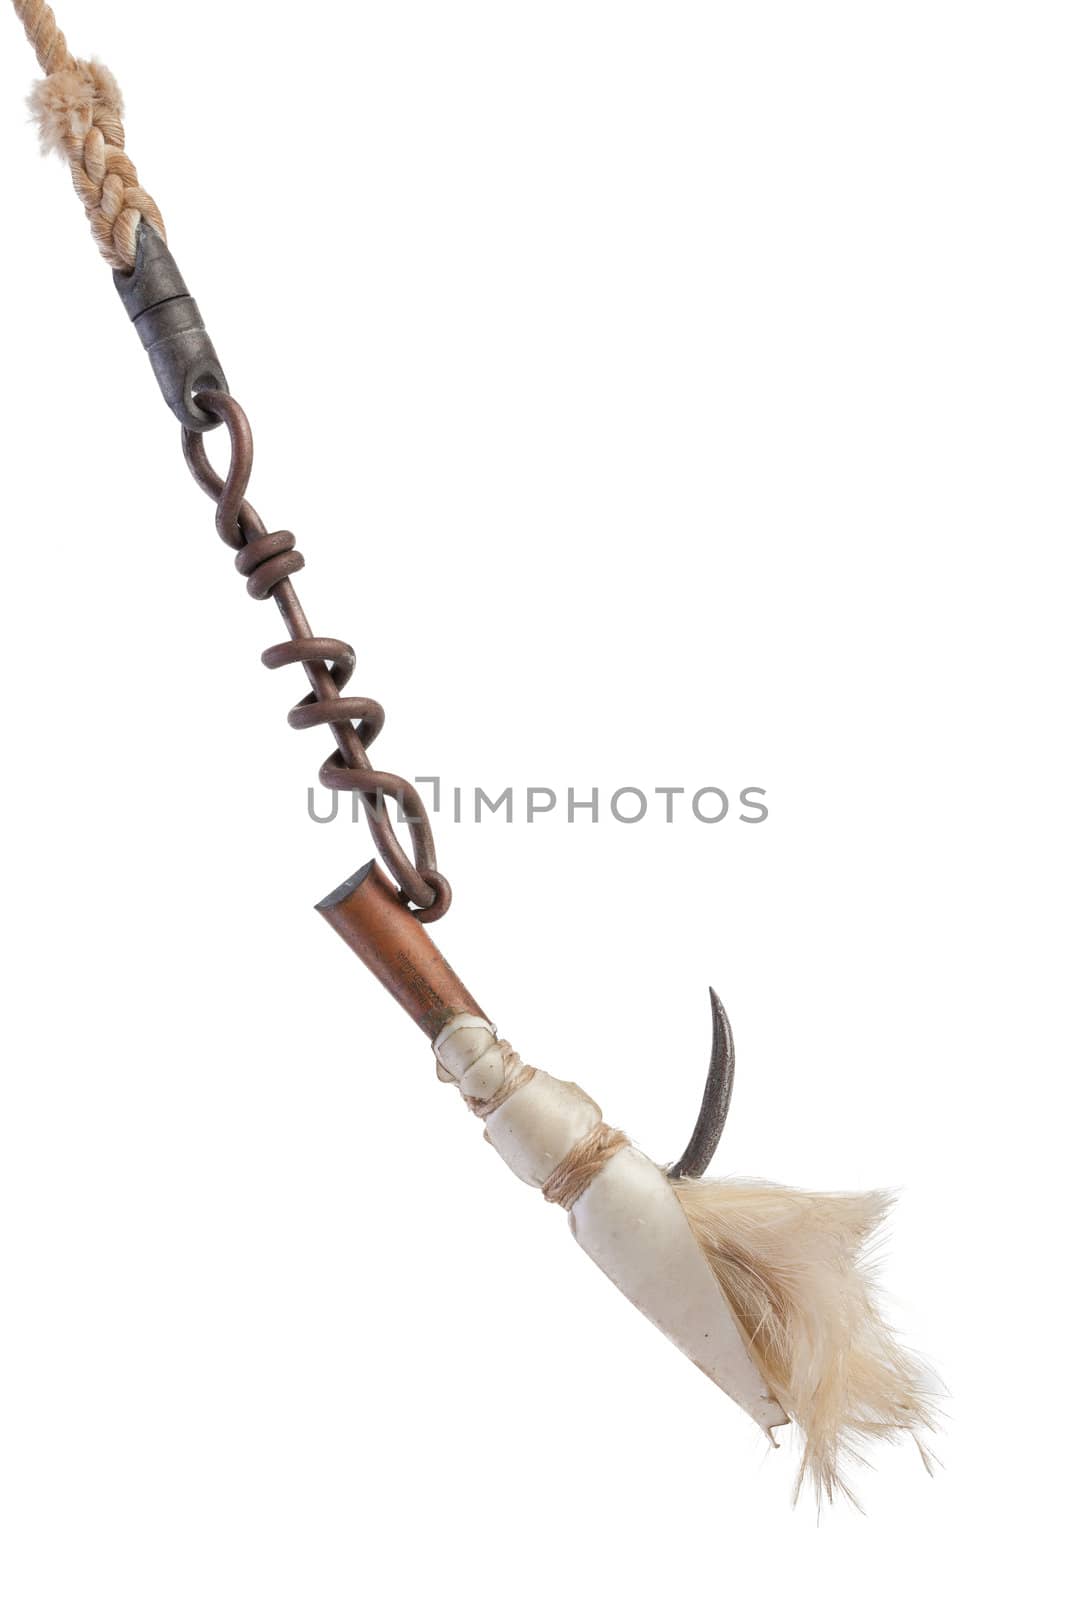 Antique Janpanese Fishing Hook by Orchidflower